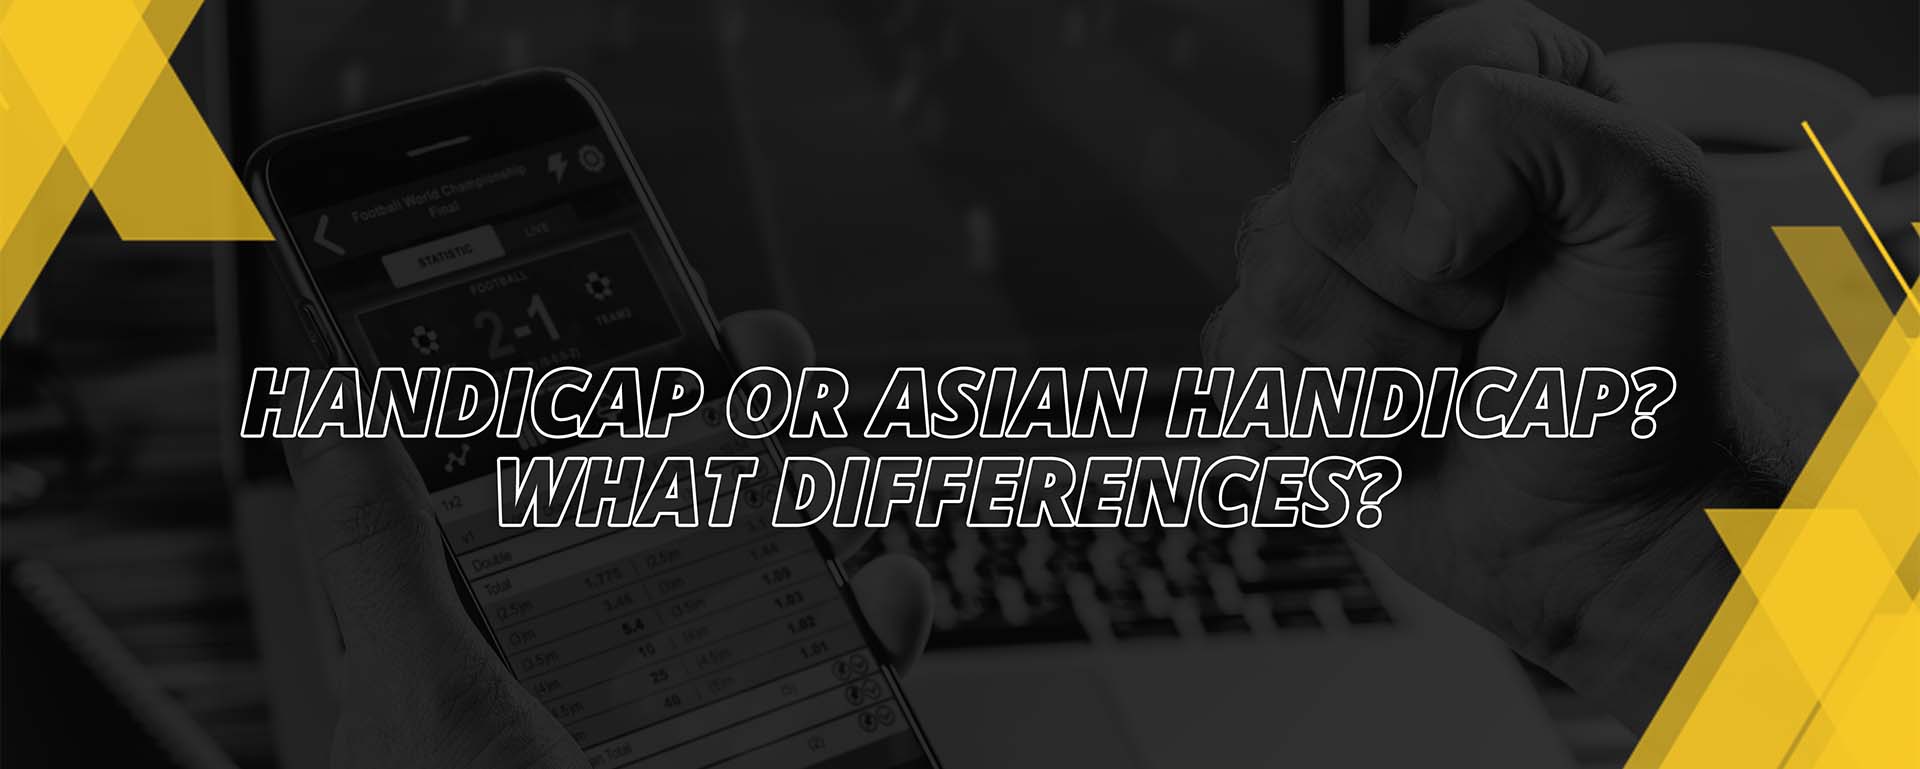 HANDICAP OR ASIAN HANDICAP? WHAT DIFFERENCES?